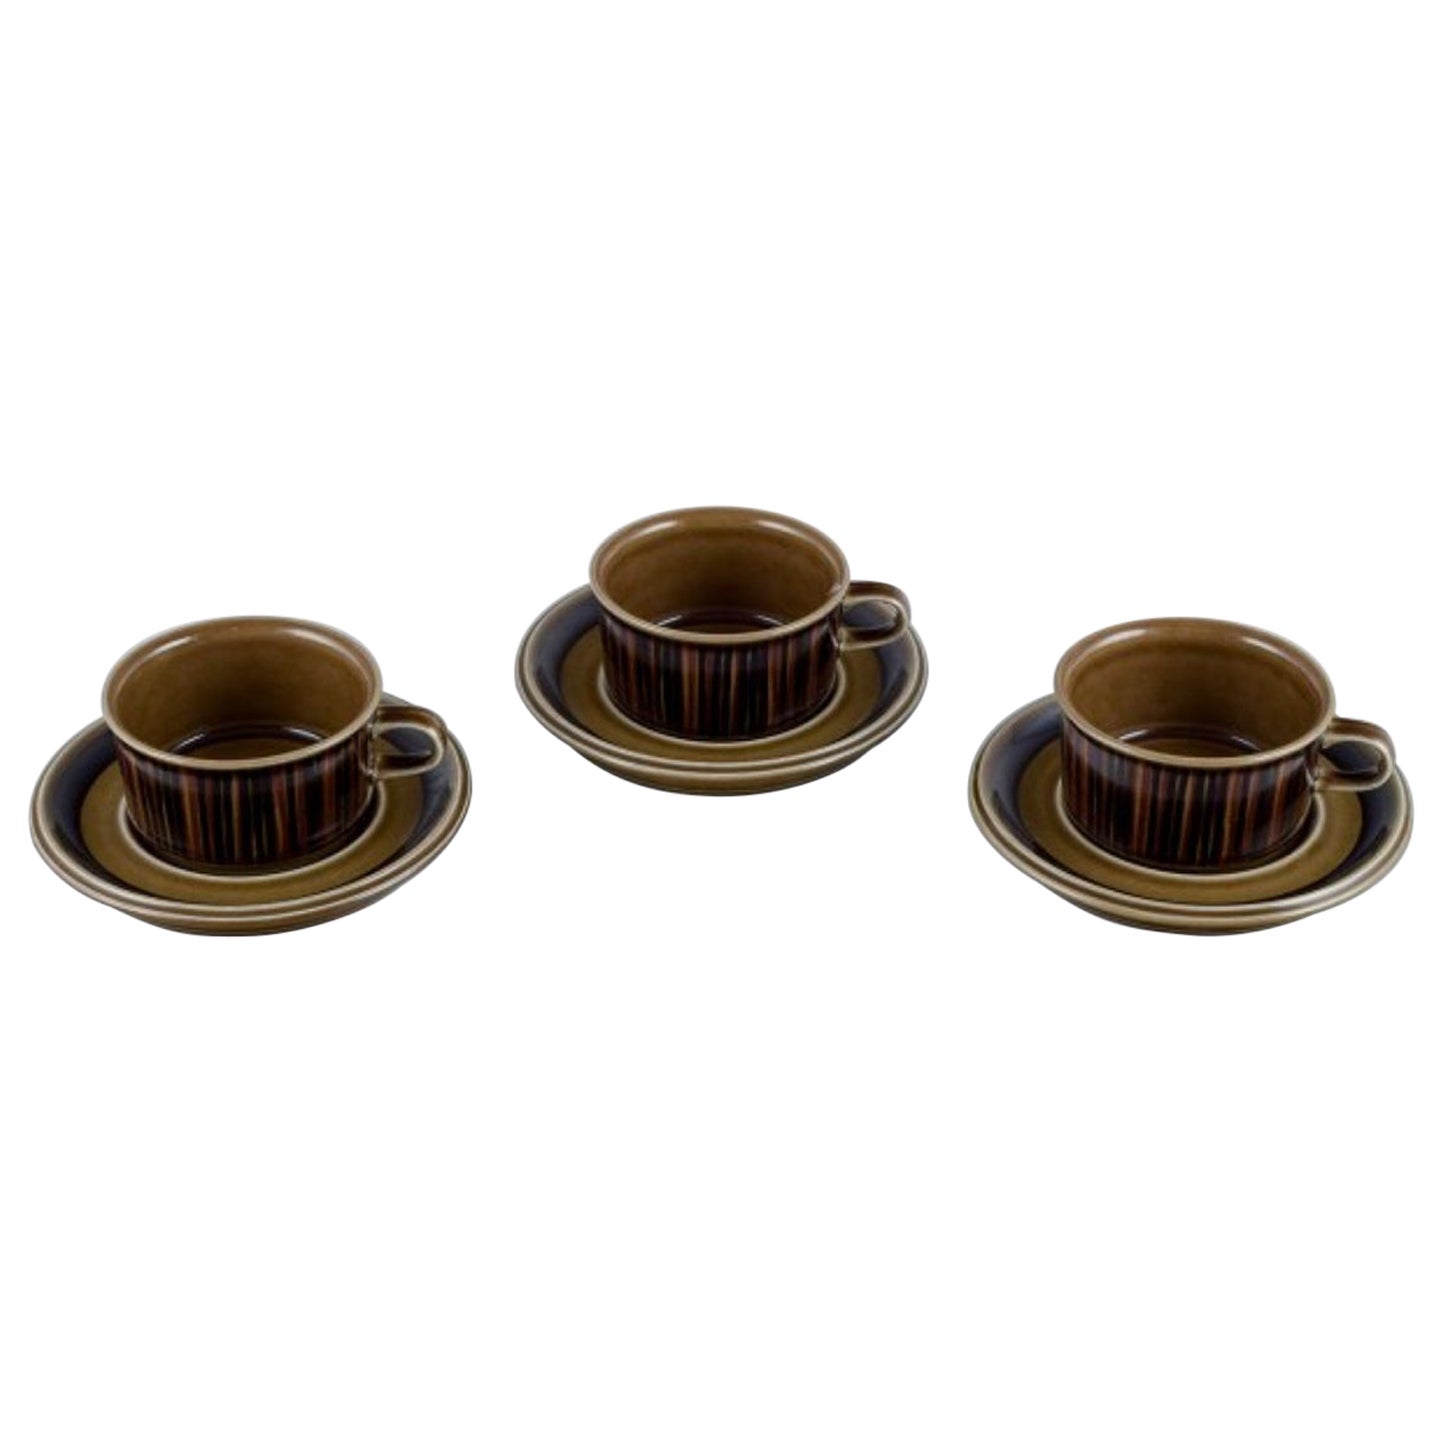 Gunvor Olin-Grönqvist for Arabia, "Cosmos, three sets of tea cups with  saucers